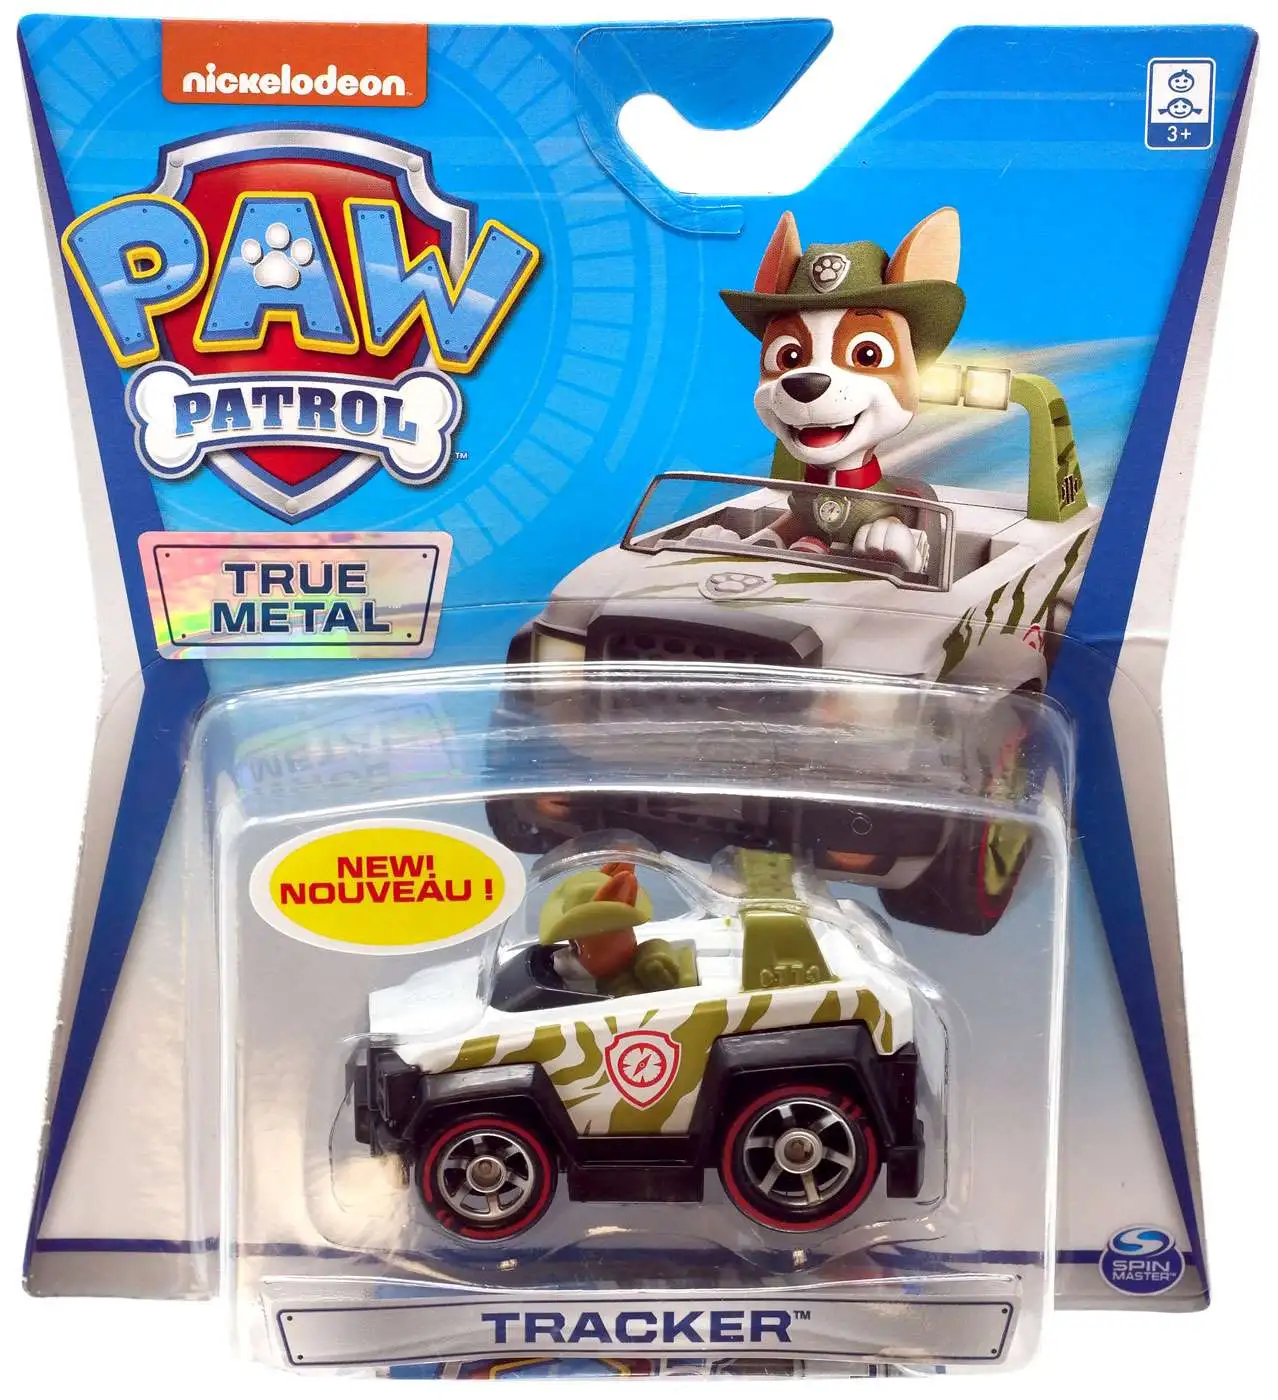 PAW Patrol True Metal Vehicles - Choose Your Favorite!